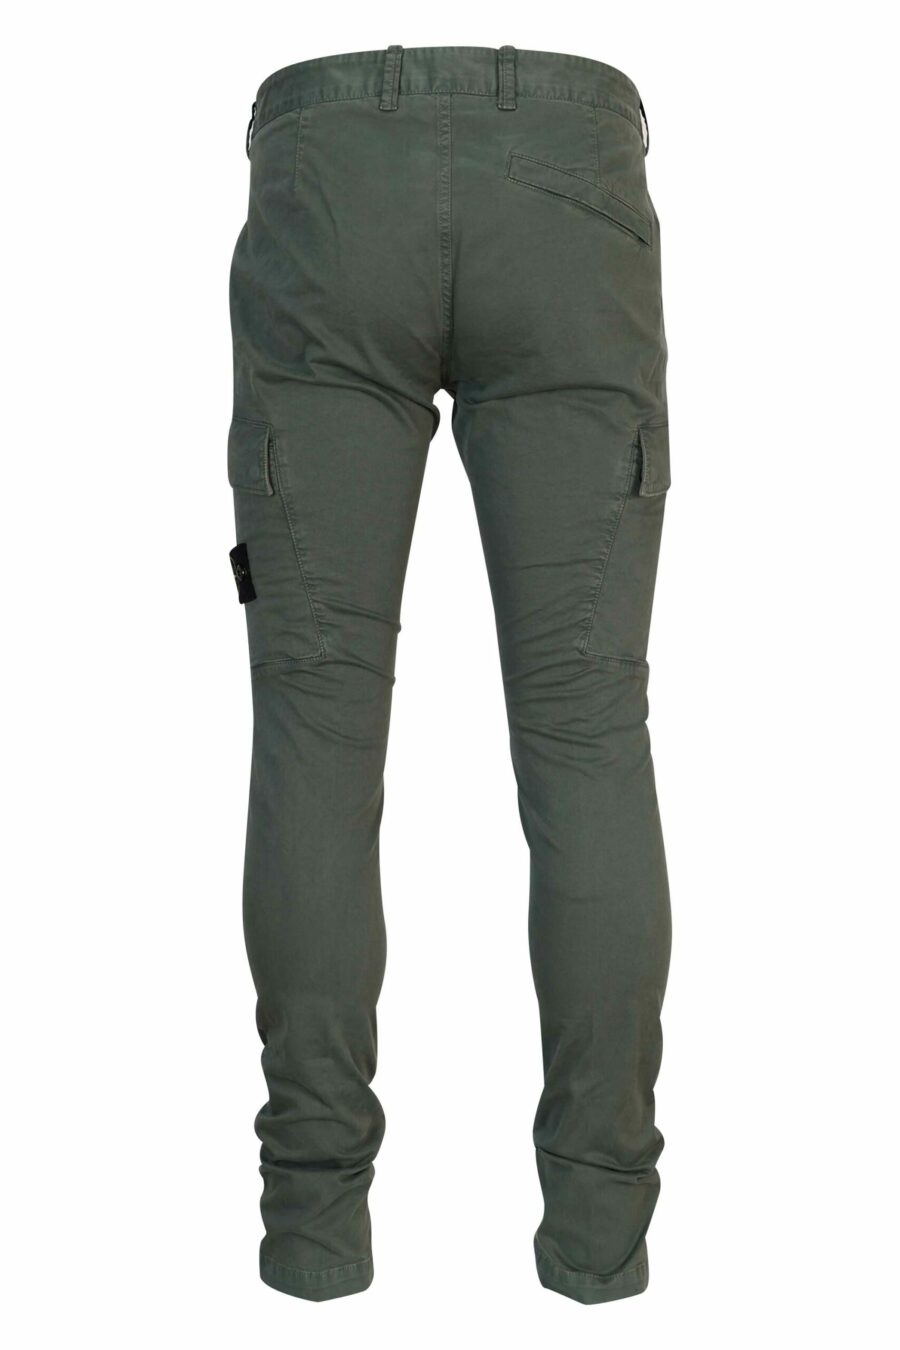 Pantalon skinny cargo vert militaire avec logo patch boussole - 8052572930263 2 scaled